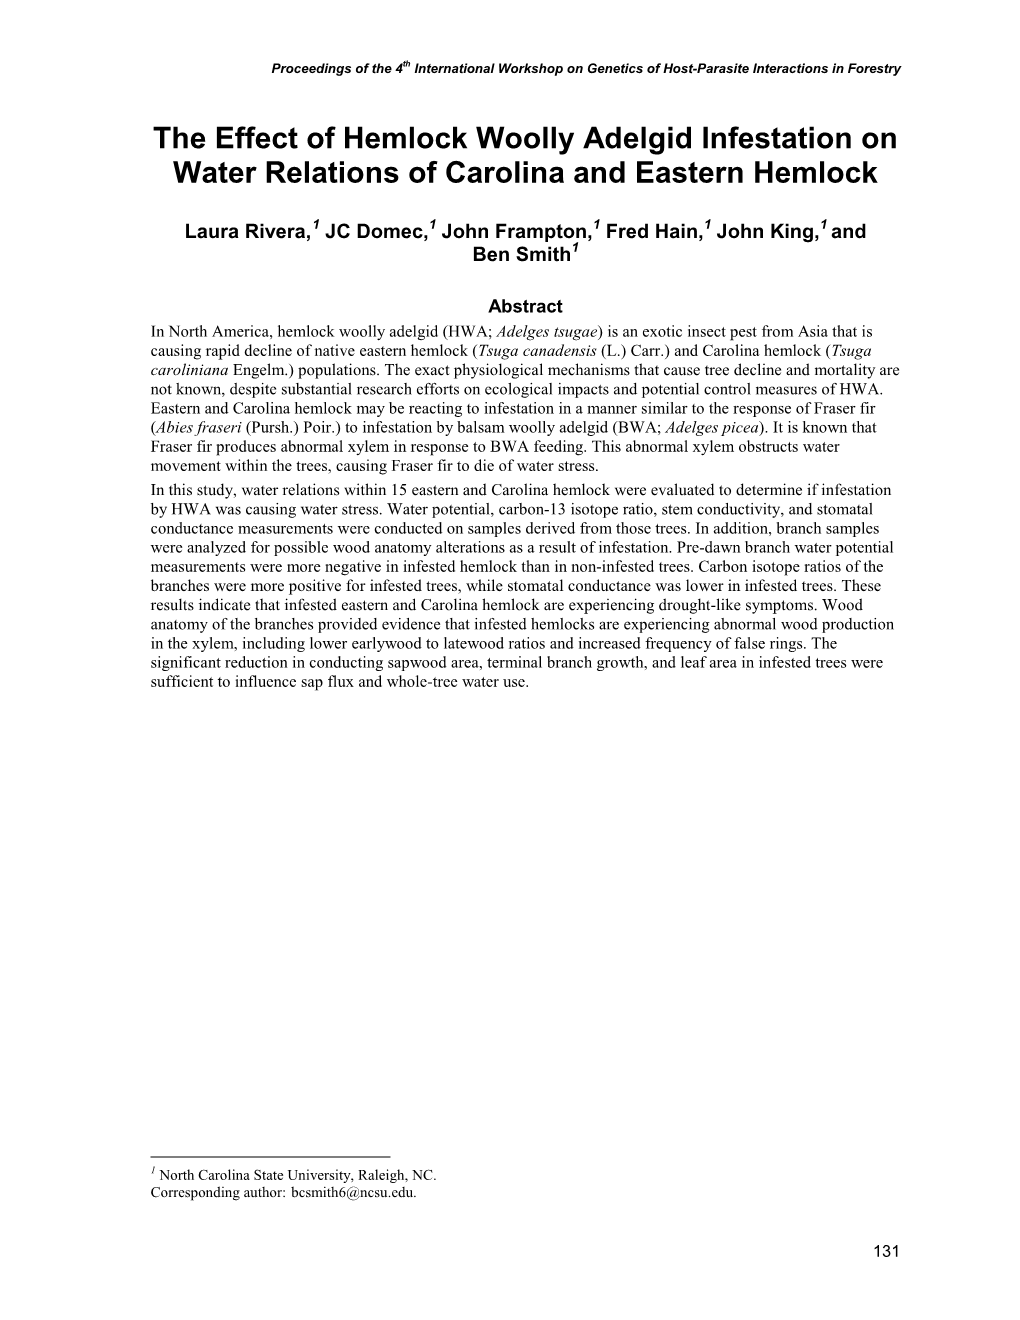 The Effect of Hemlock Woolly Adelgid Infestation on Water Relations of Carolina and Eastern Hemlock